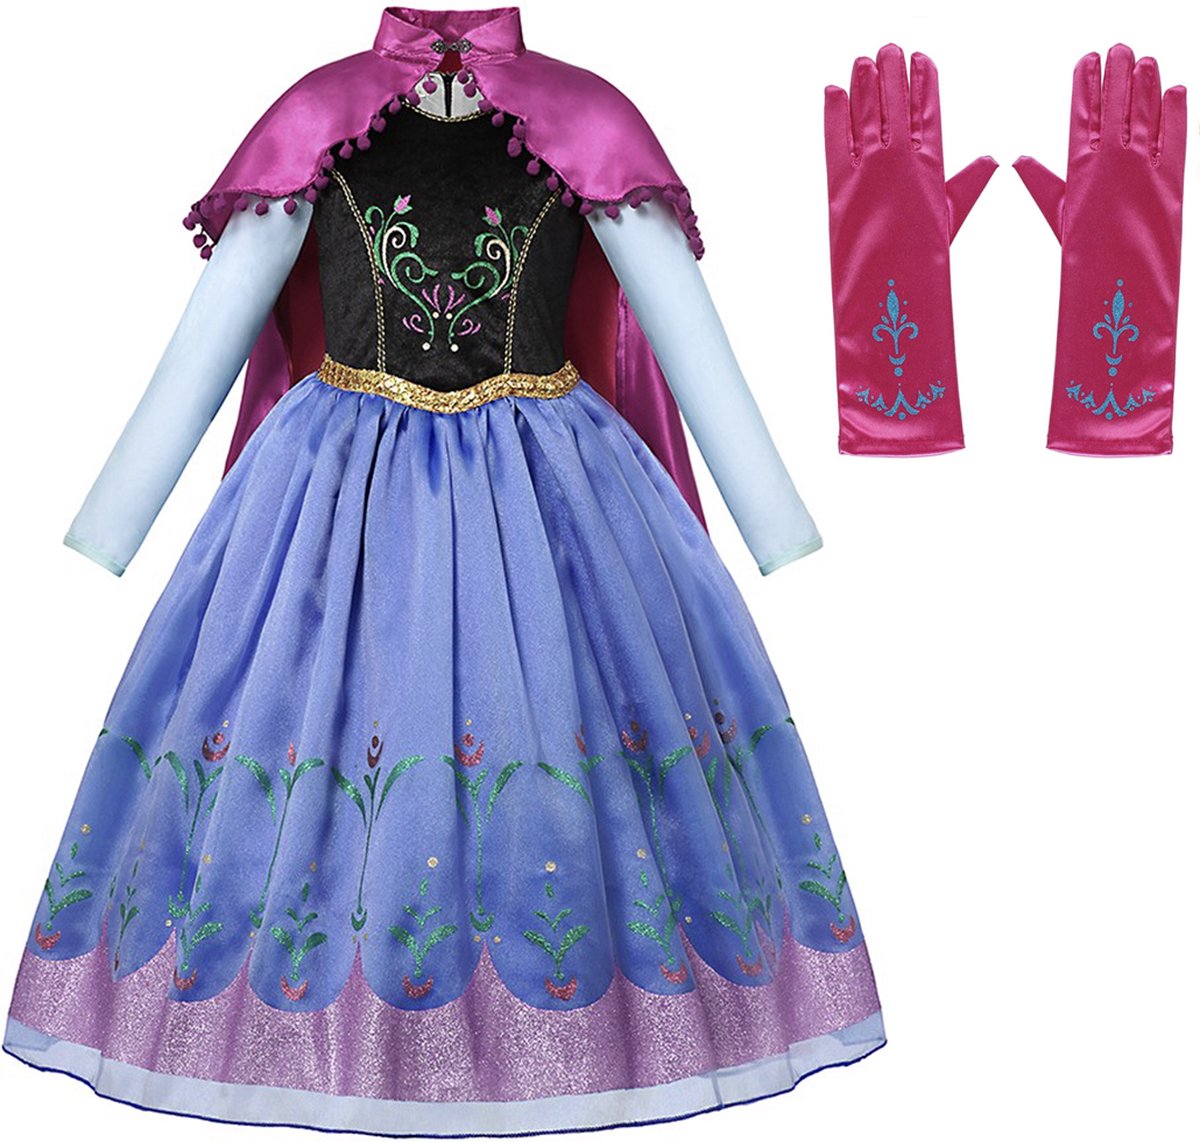 Prinsessenjurk meisje - Prinsessen speelgoed - verkleedkleding meisje - Het Betere Merk - Lange roze cape - Maat 134/140 (140) - Carnavalskleding - Cadeau meisje - Verkleedkleren - Kleed